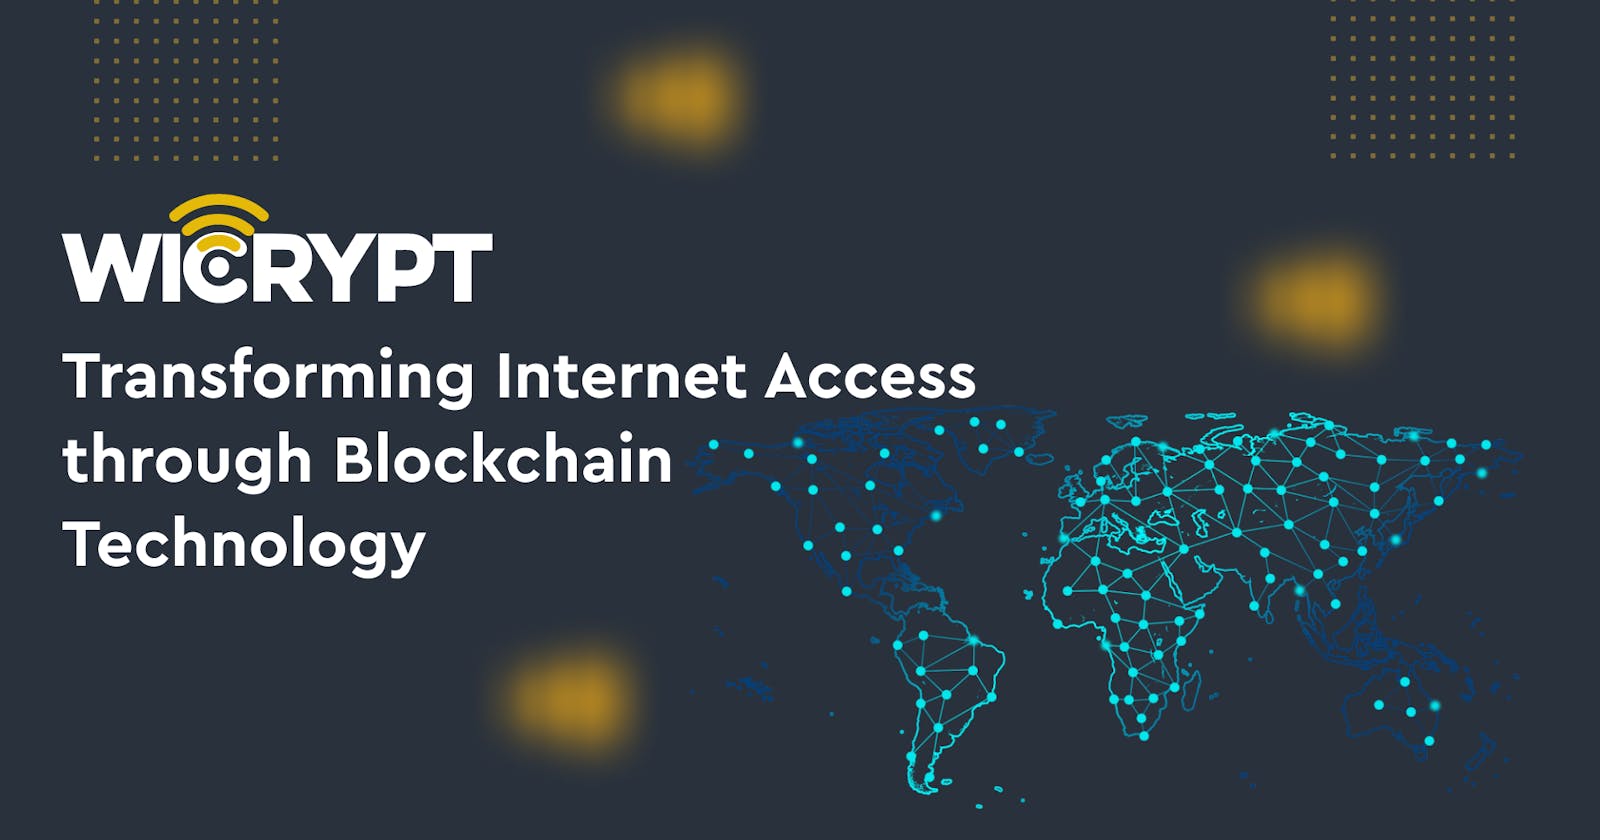 Wicrypt: Transforming Internet Access through Blockchain Technology